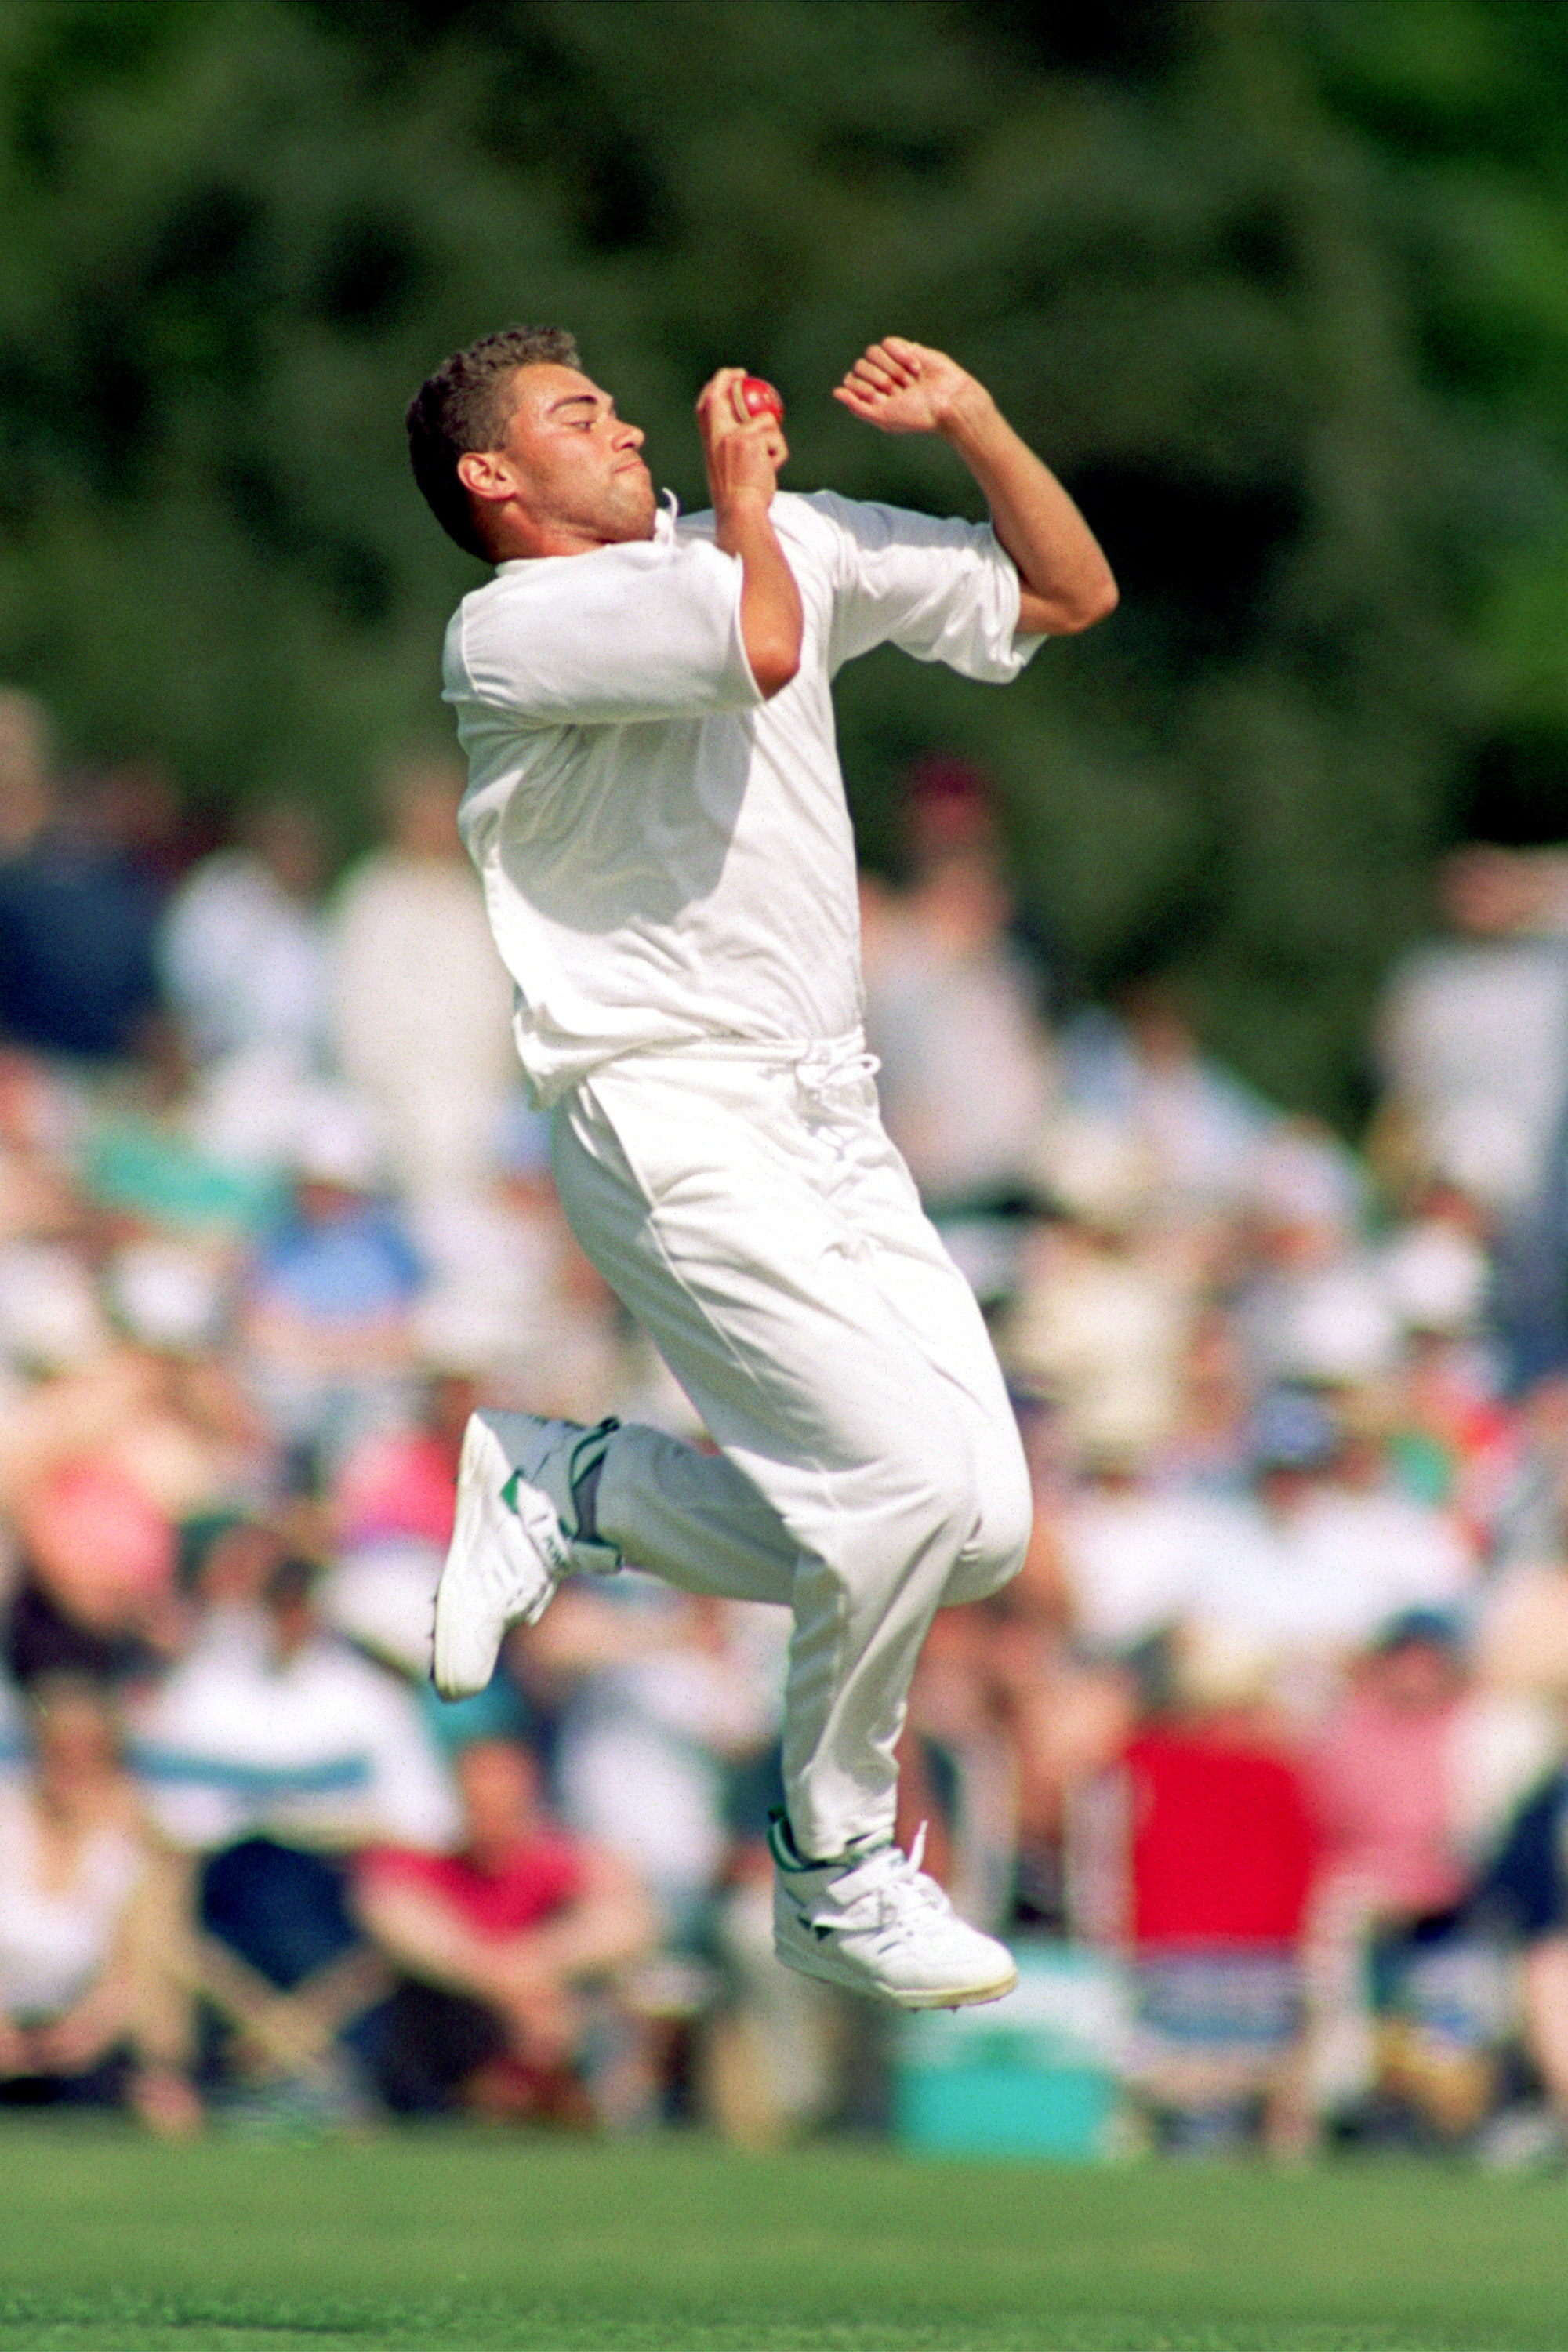 Heath Davis in action for New Zealand.